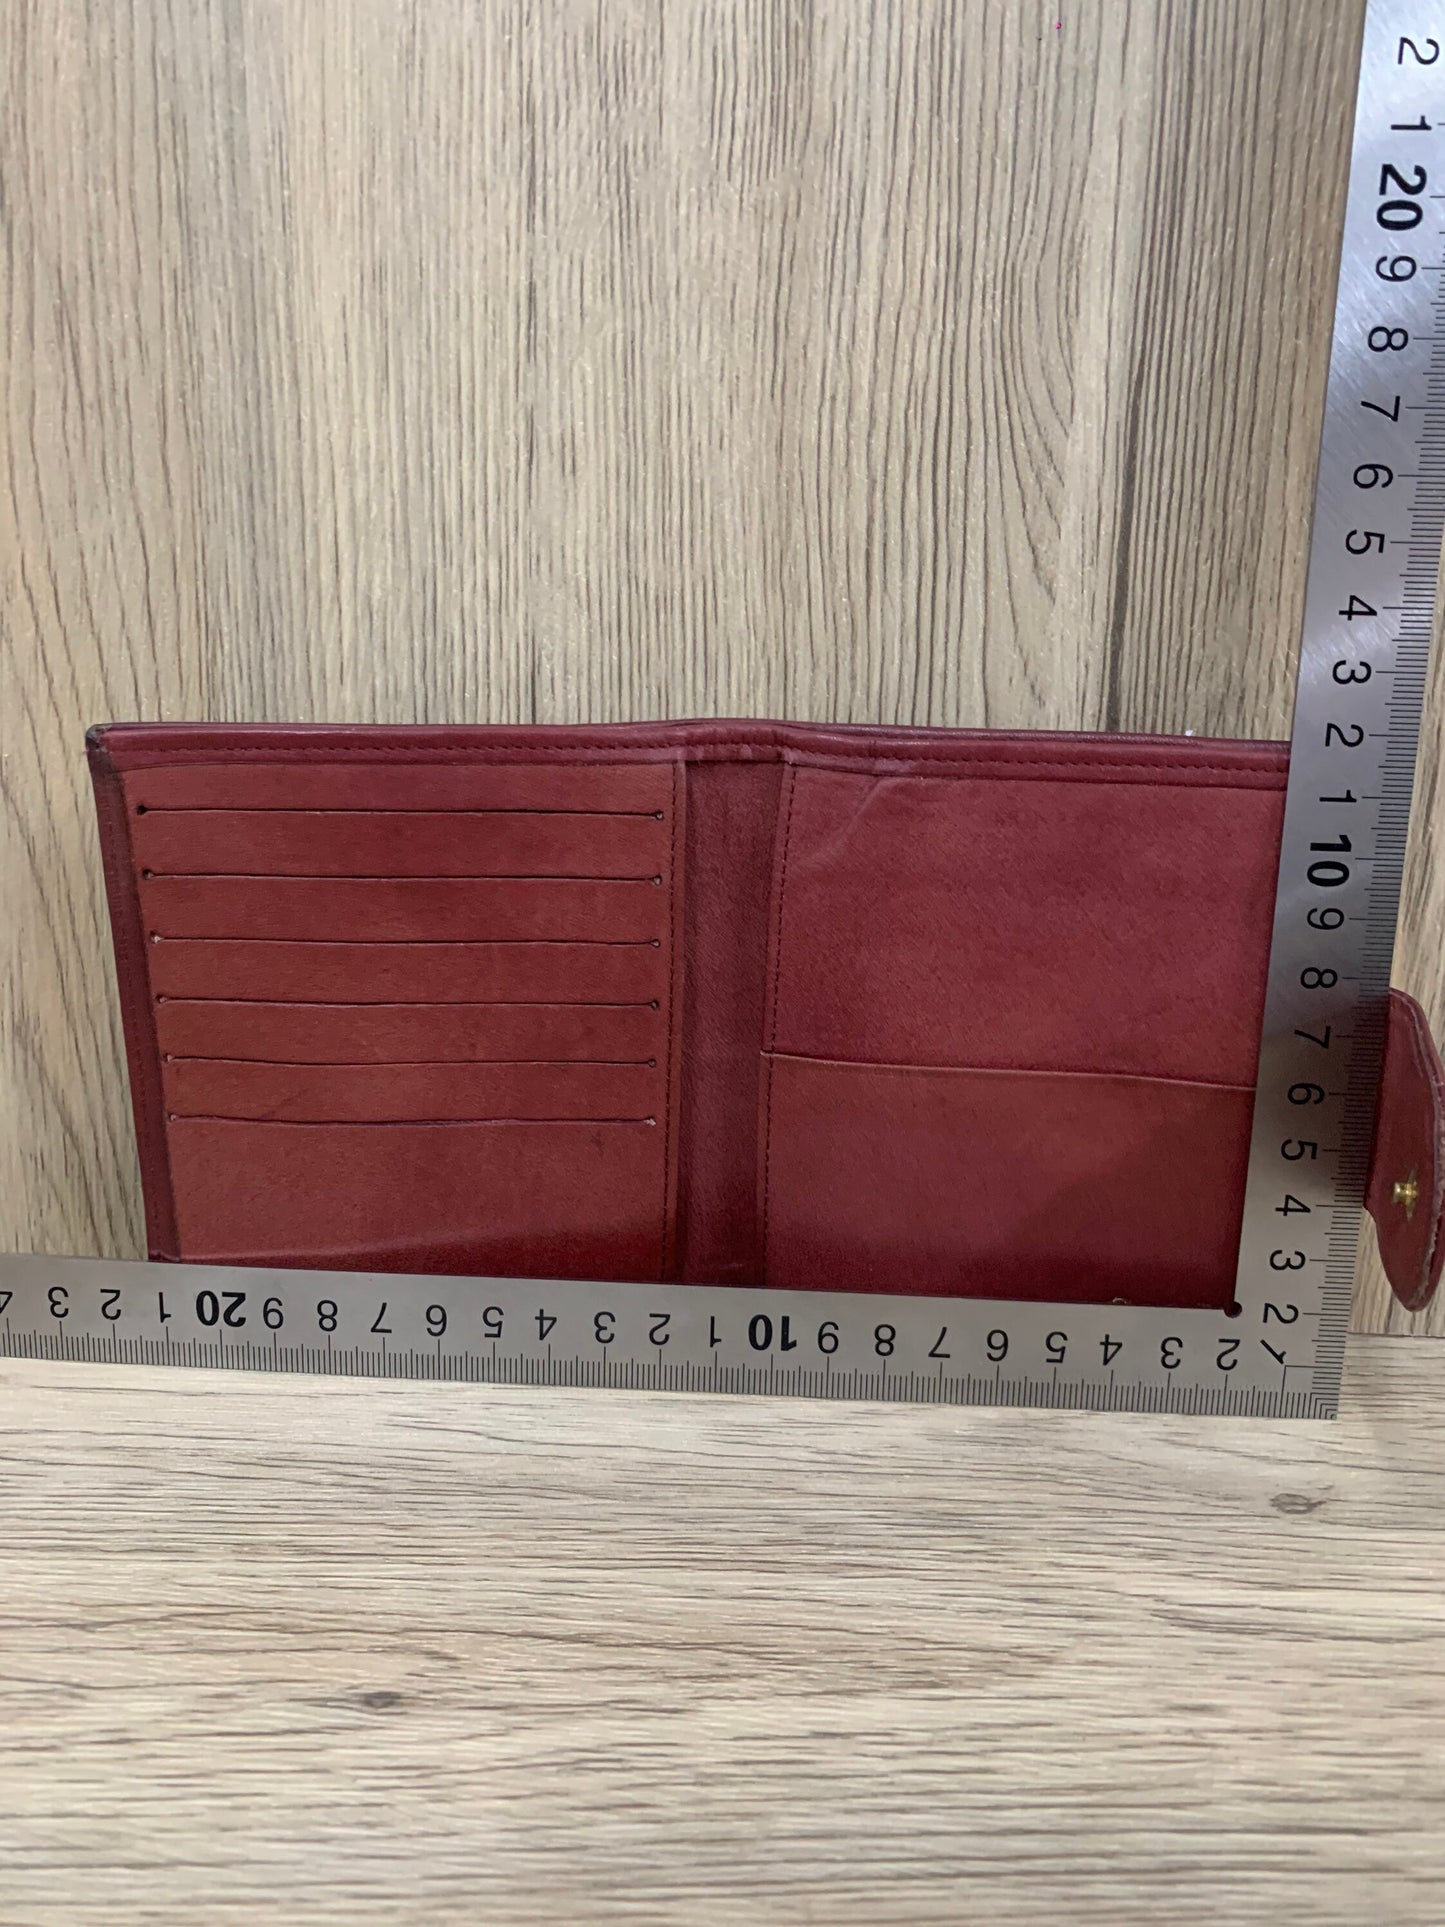 Vintage Christian  Dior red  wallet W10 x 11.5H x  21cm ( 13 Jun 22 - BBW 51)